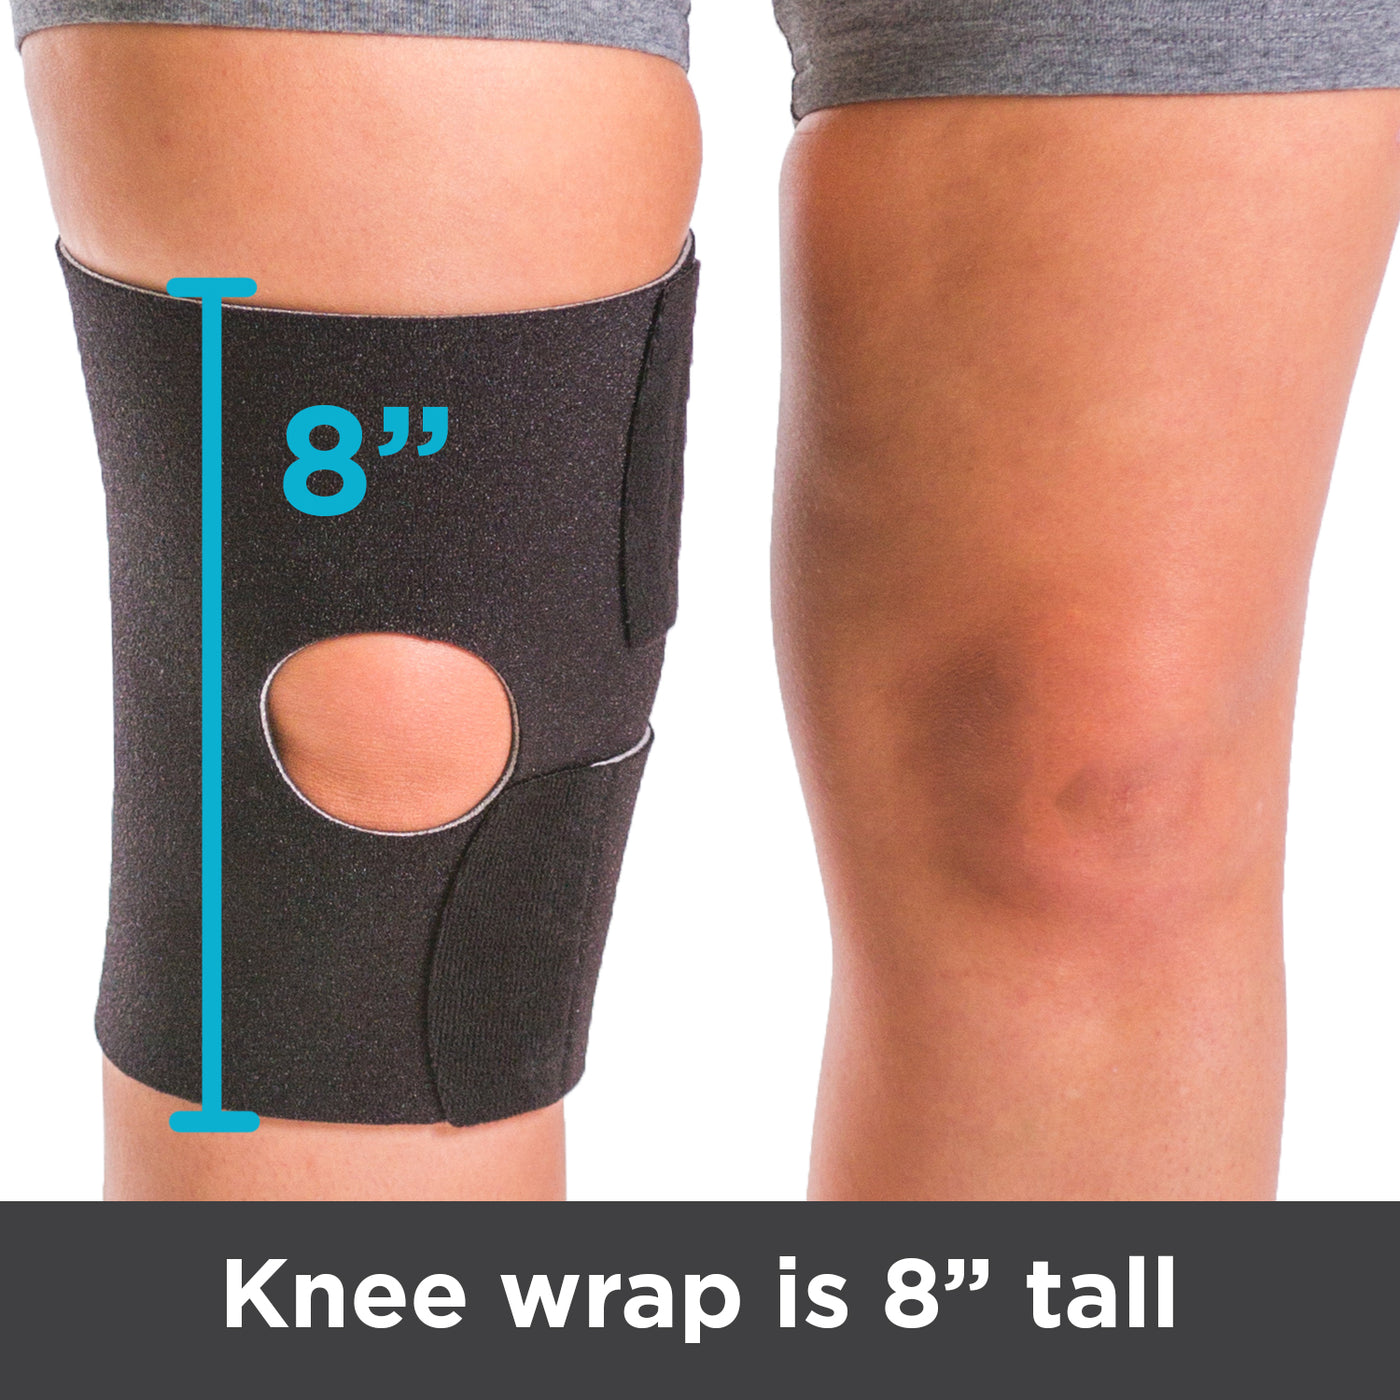 Arthritis knee brace is 8 inches tall